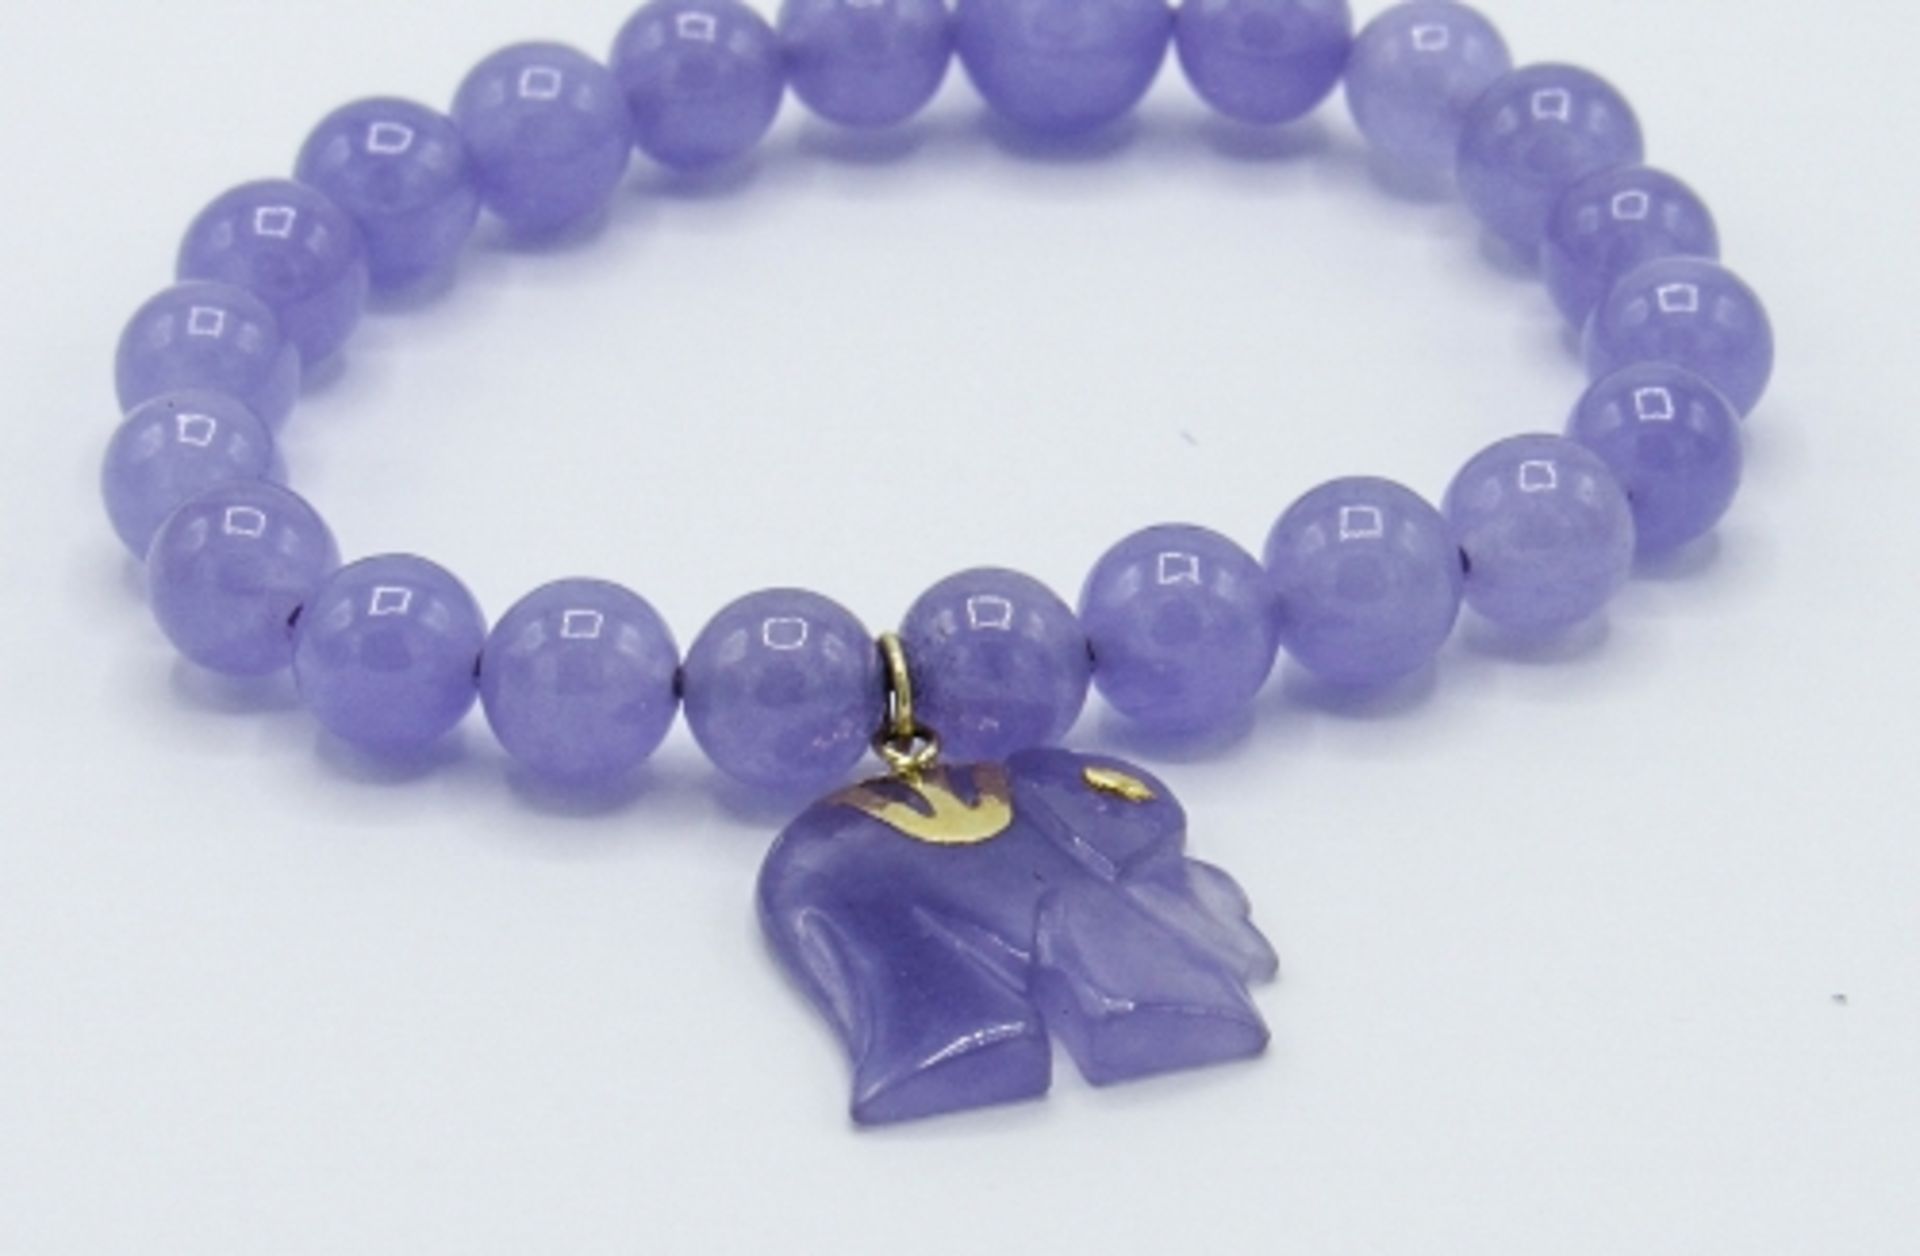 14ct gold mounted lavender jade elephant pendant & matching bracelet. Estimate £15-20 - Image 2 of 3